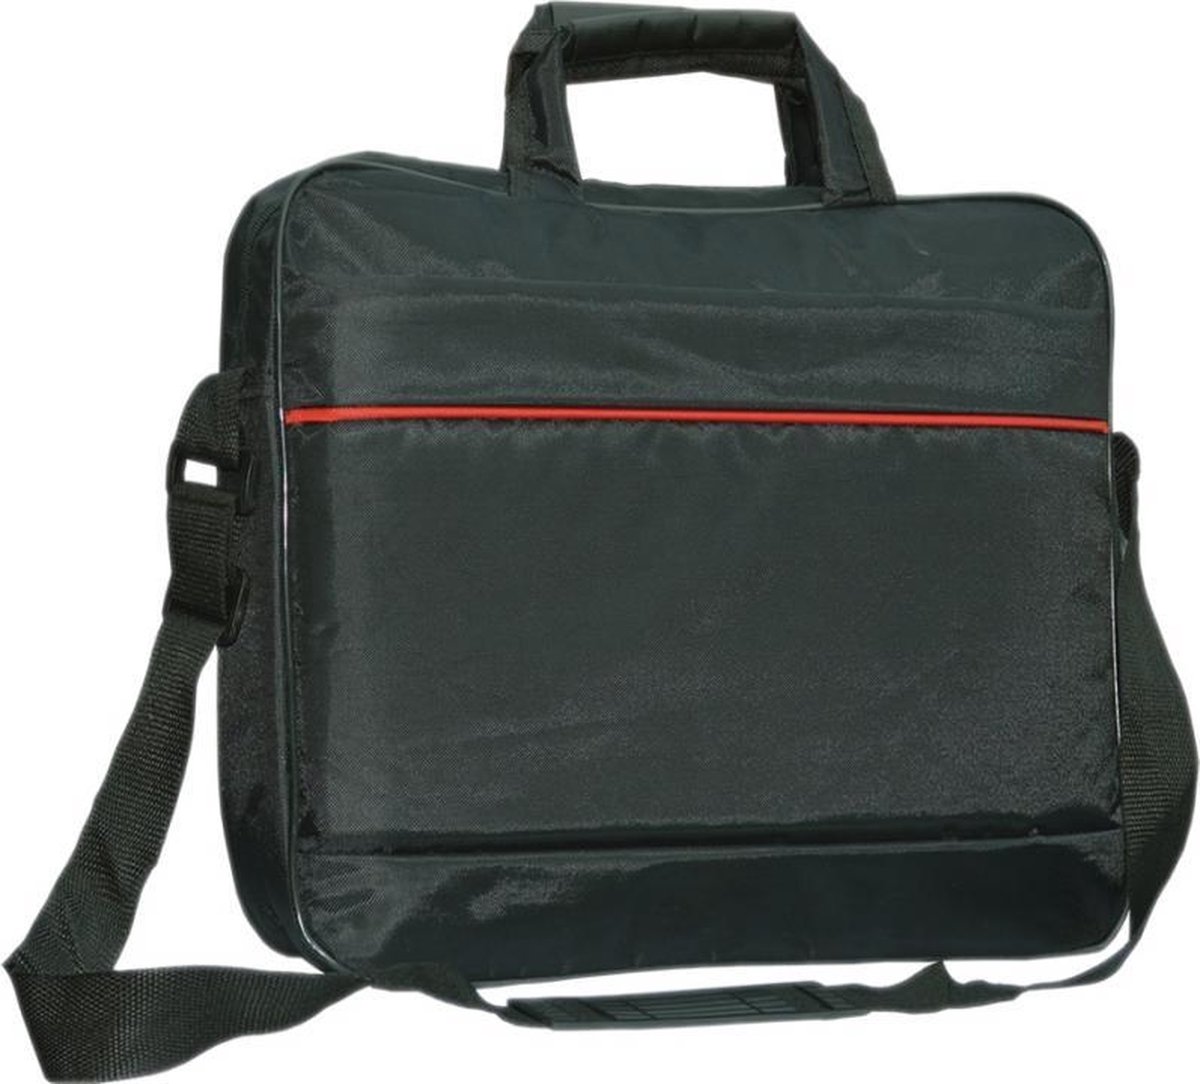 Sony Vaio Duo 13 laptoptas messenger bag / schoudertas / tas , zwart , merk i12Cover